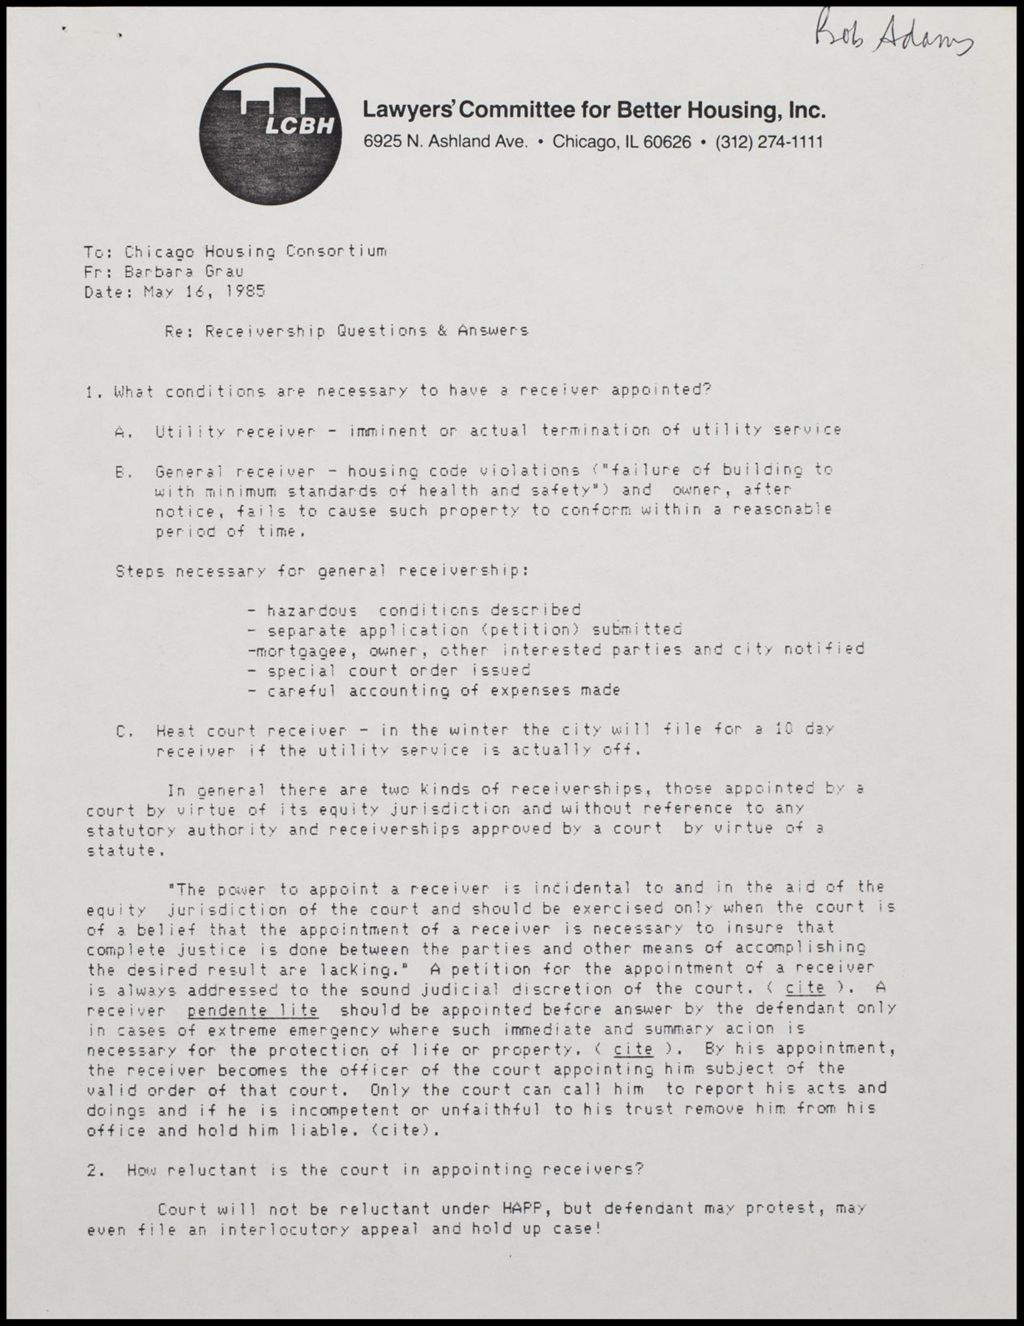 North East Network Proposal, 1985 (Folder II-1713)